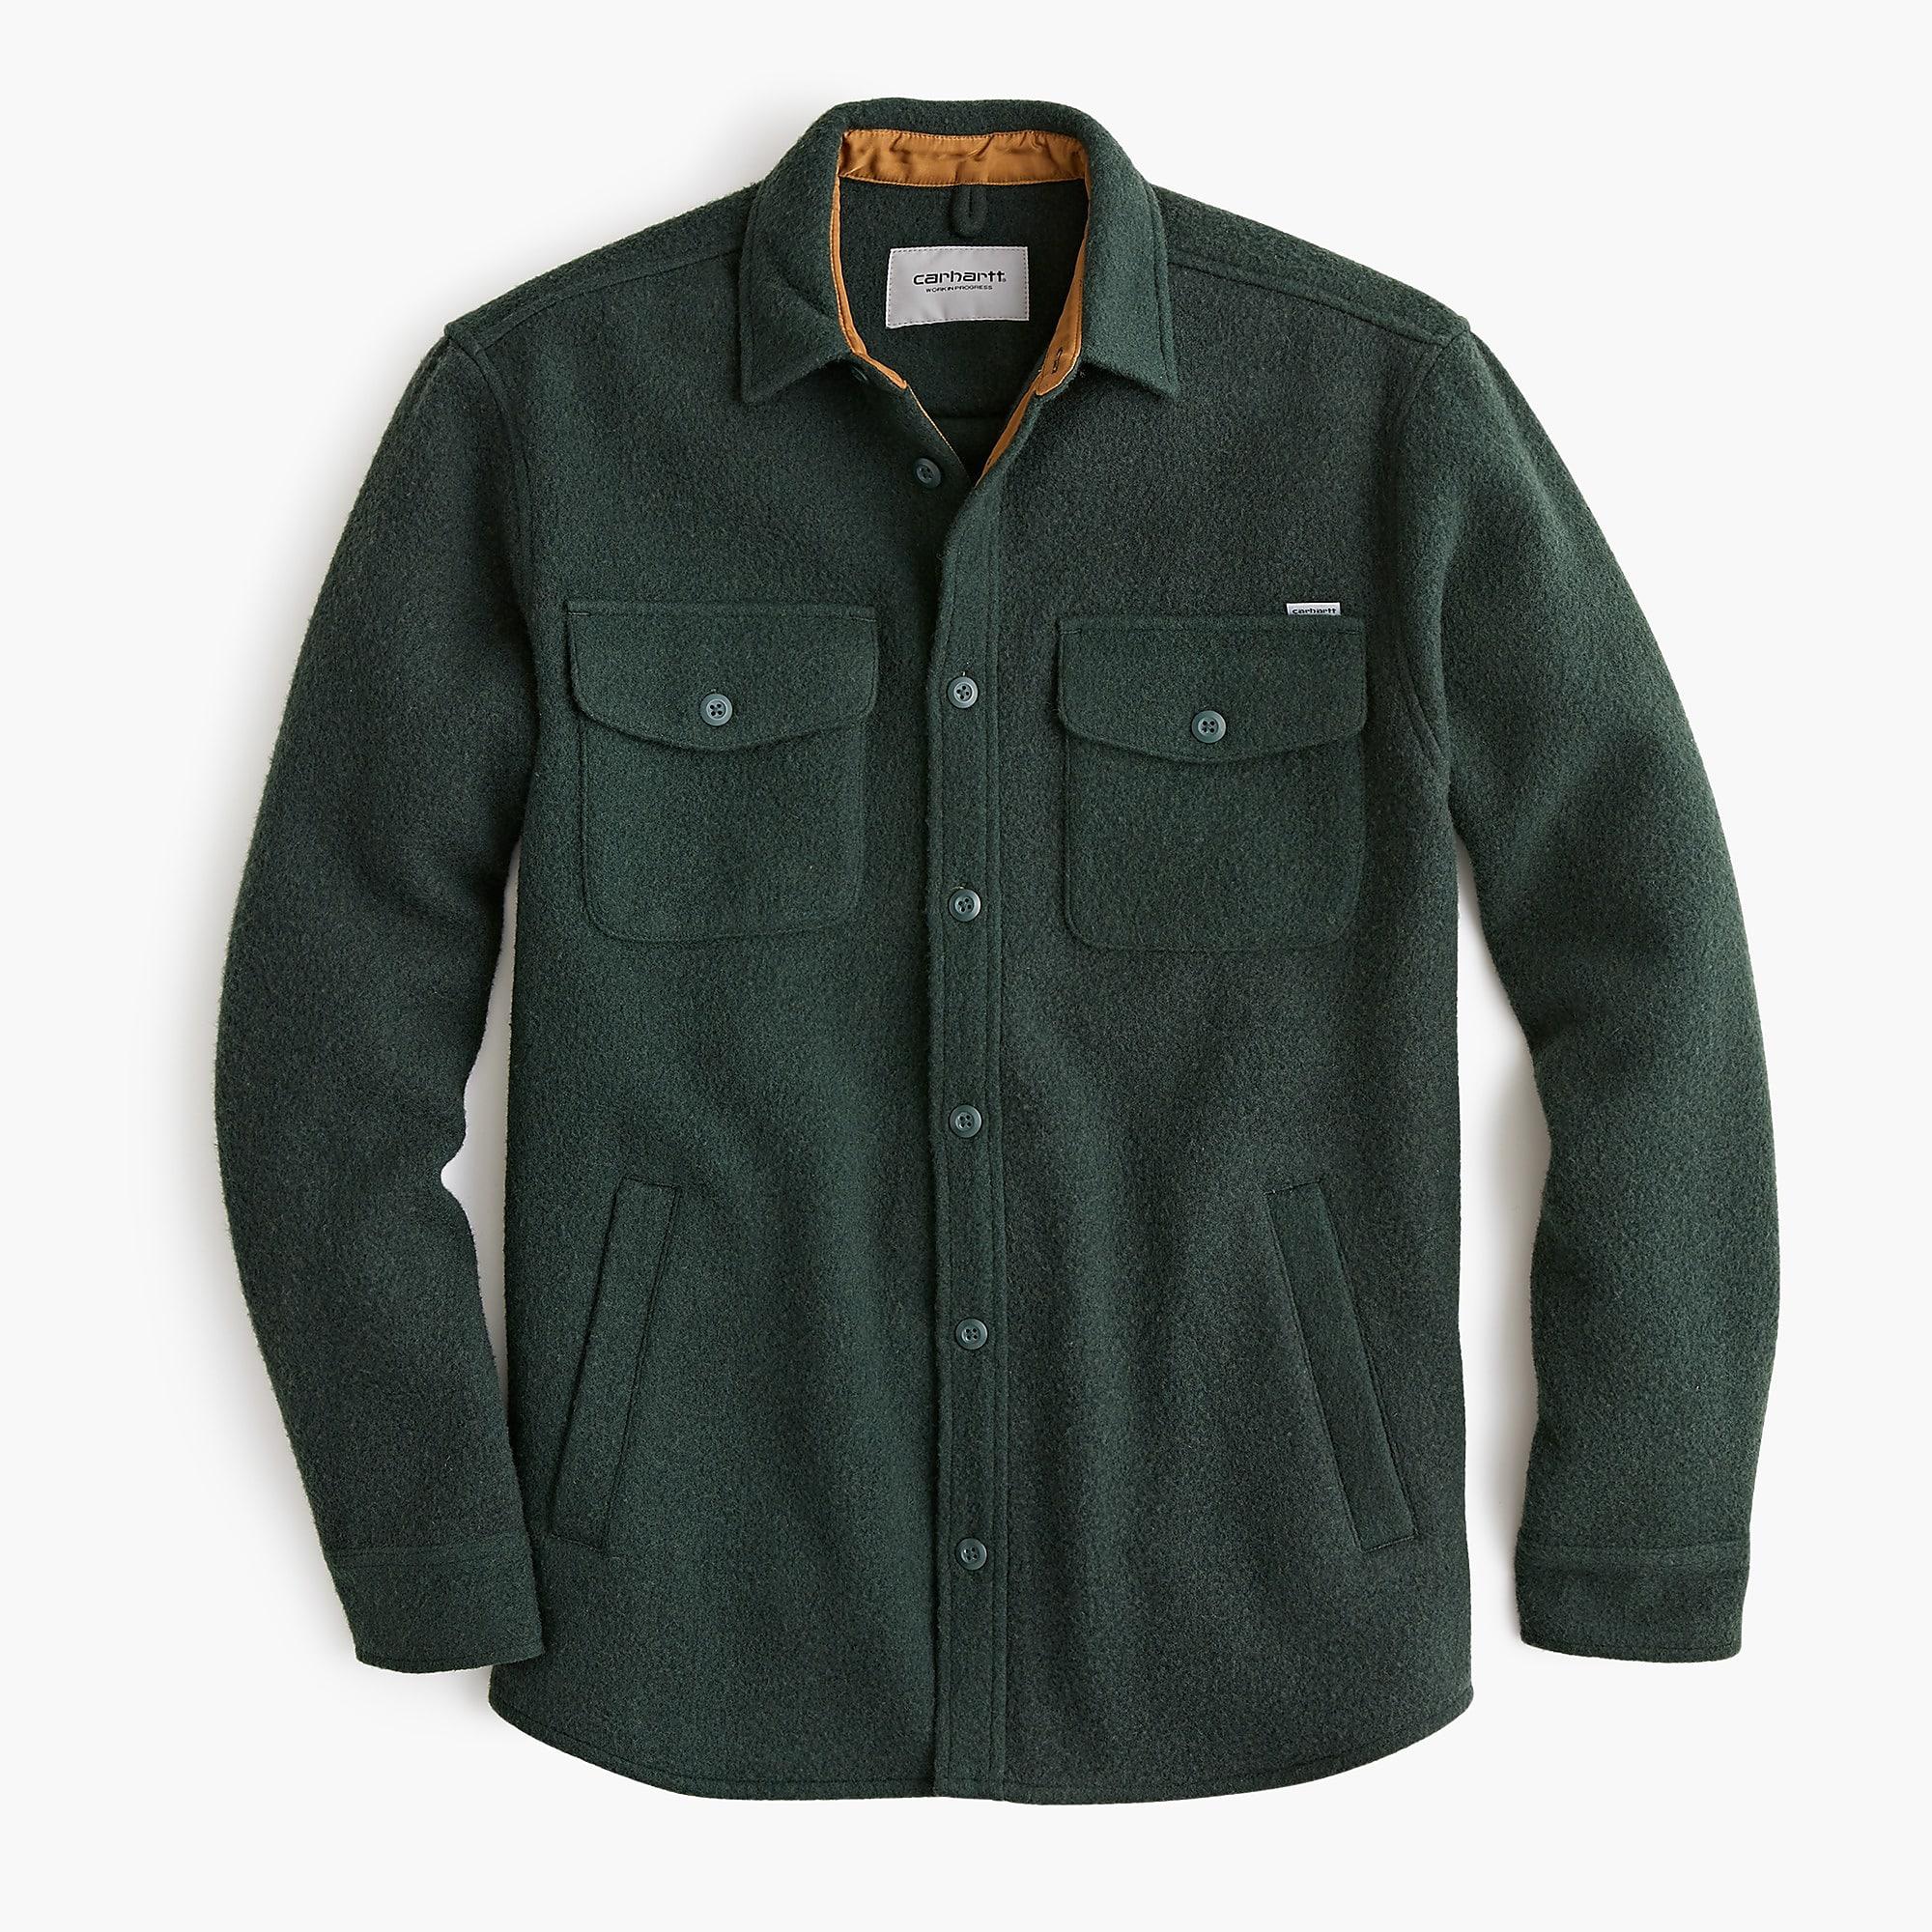 Carhartt Wip Milner Shirt Jacket Hotsell, SAVE 50% - www.fourwoodcapital.com